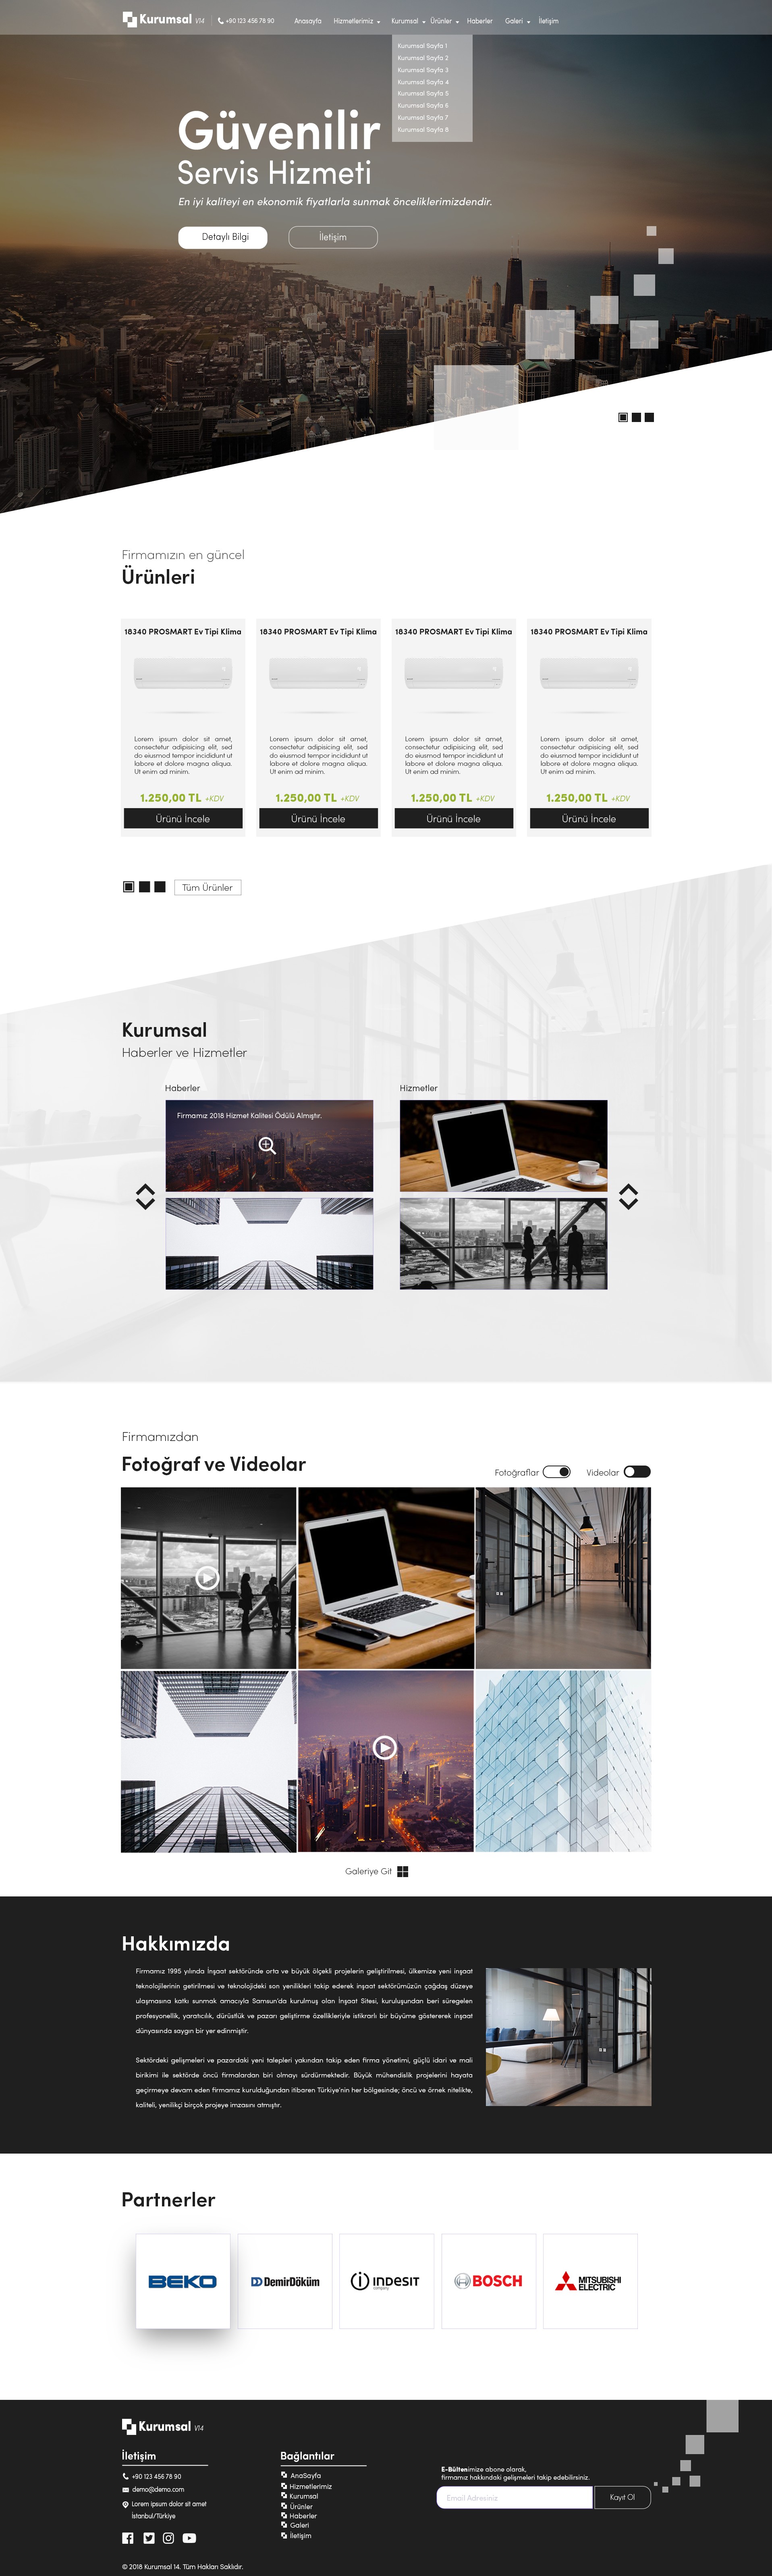 Web Agency Ecommerce Design